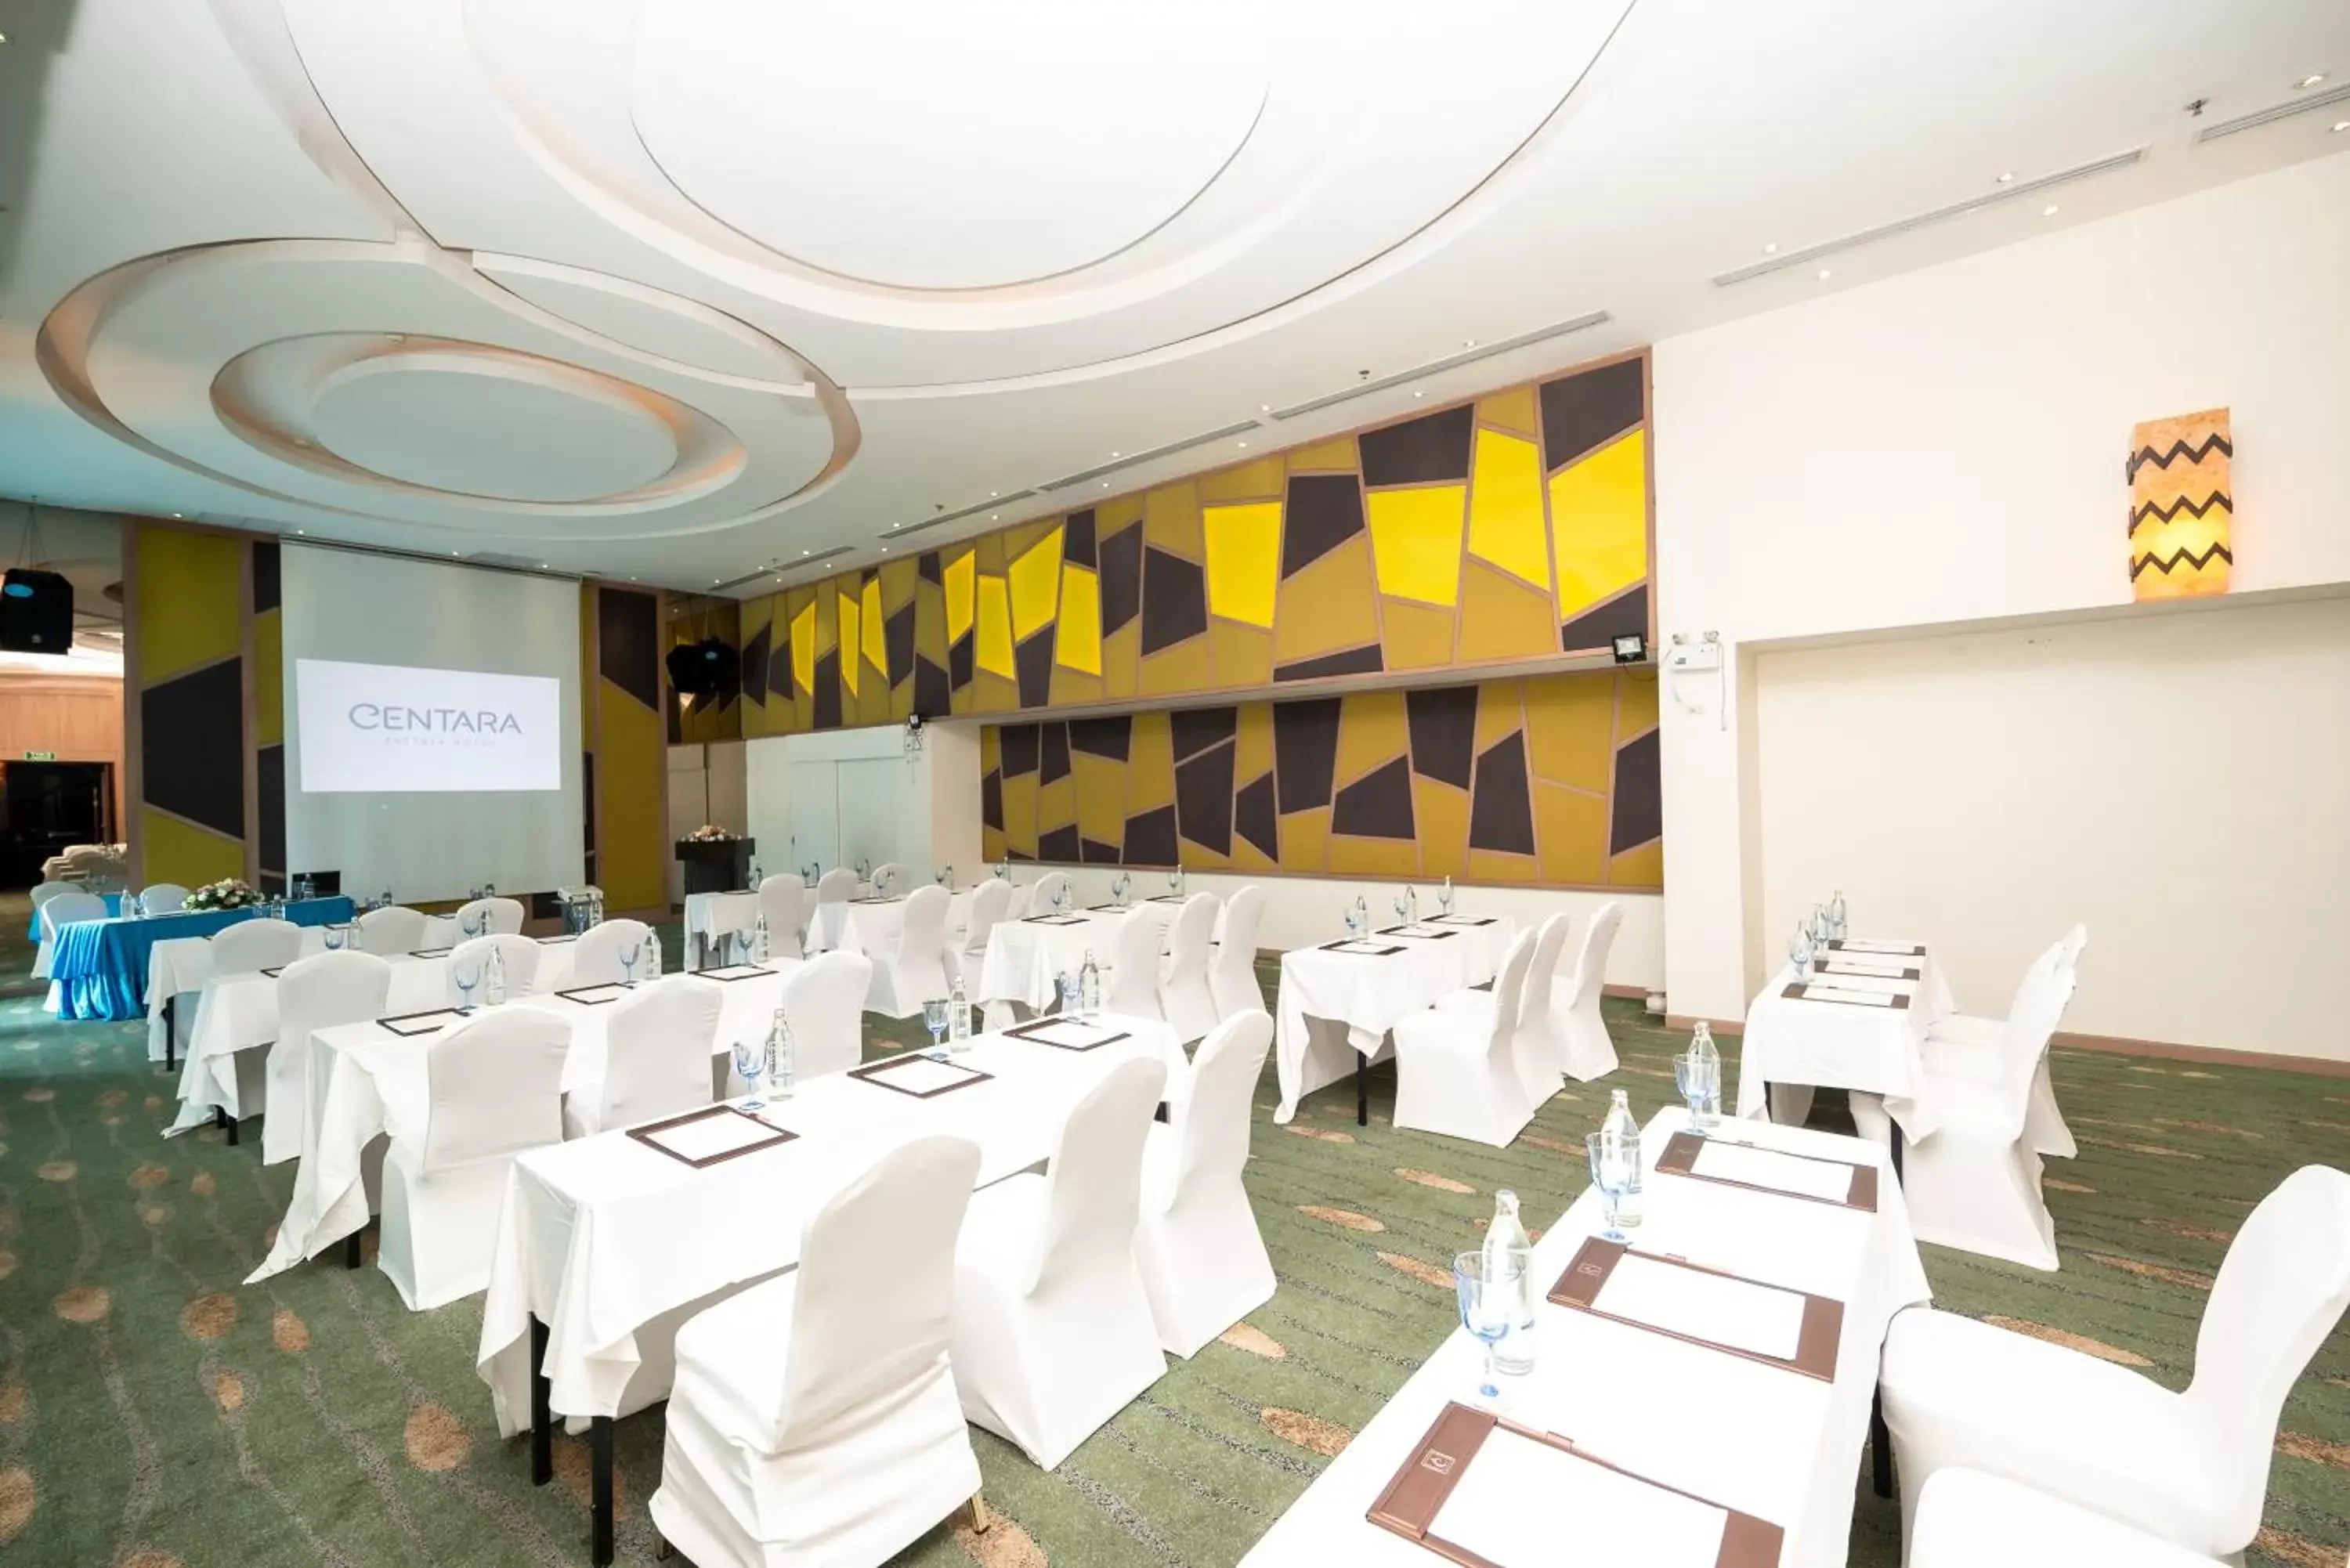 Meeting/conference room, Banquet Facilities in Centara Pattaya Hotel